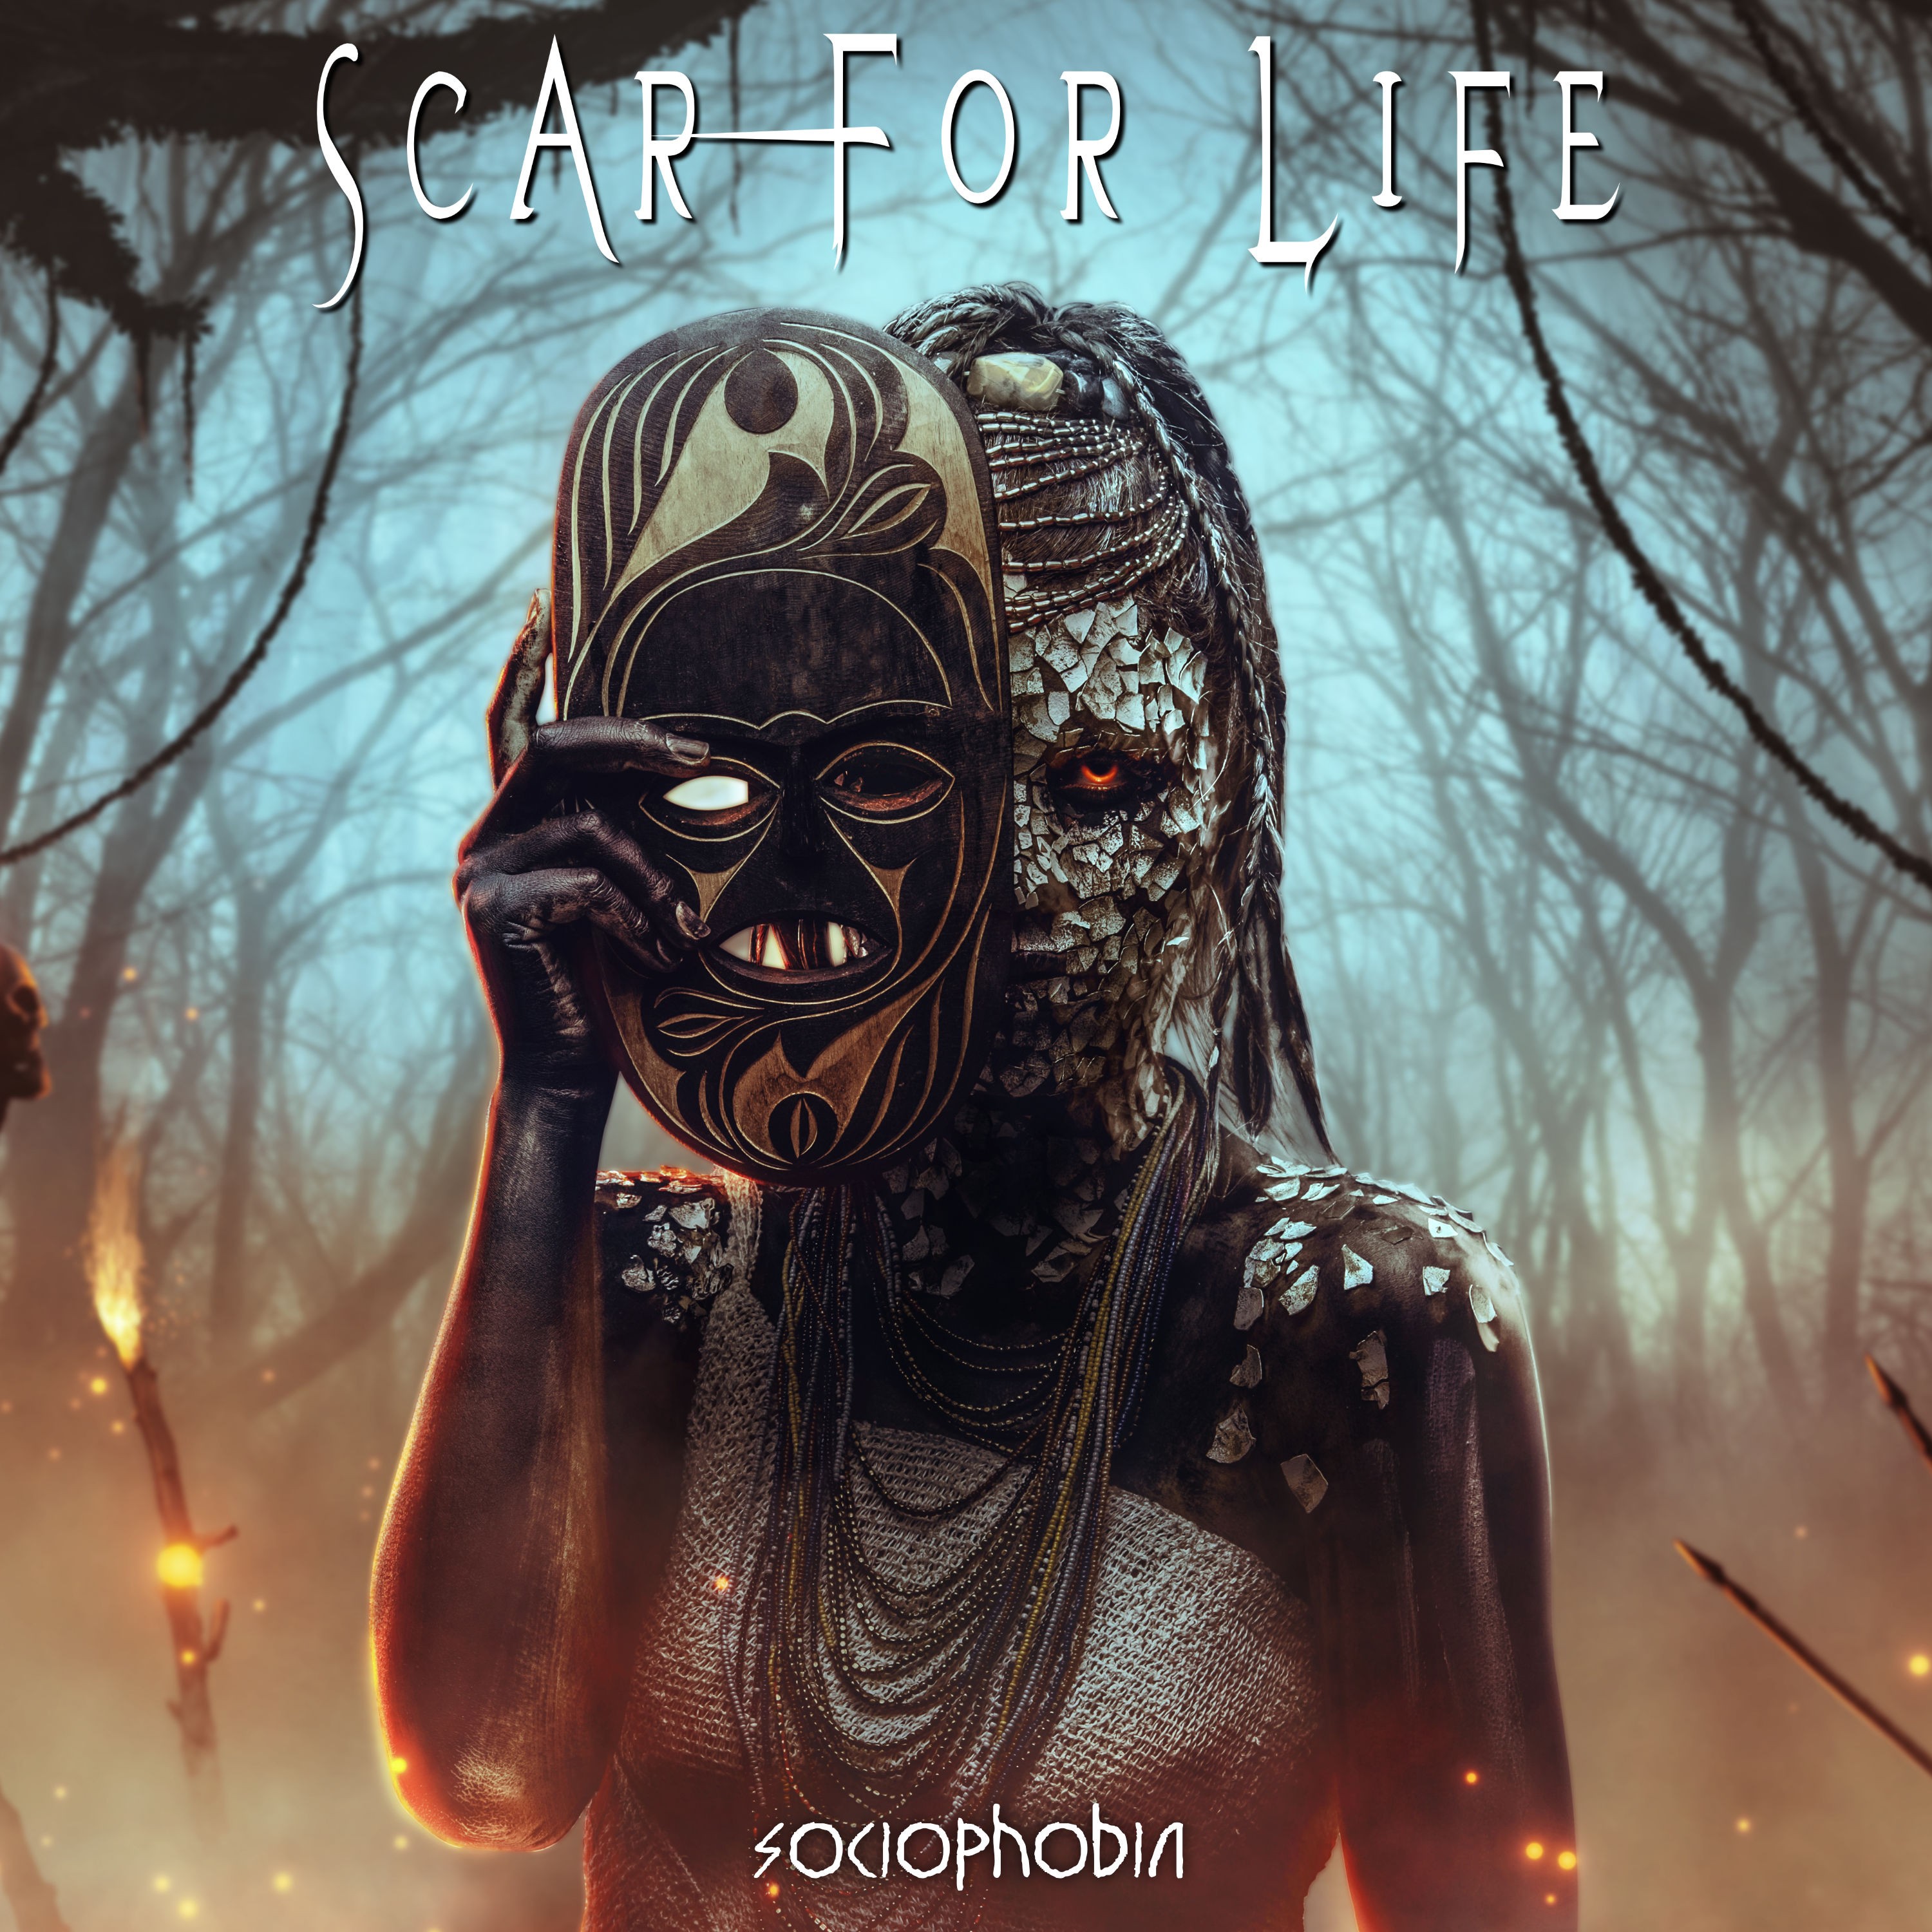 Scar For Life - Sociophobia (2022) MP3 320kbps Download